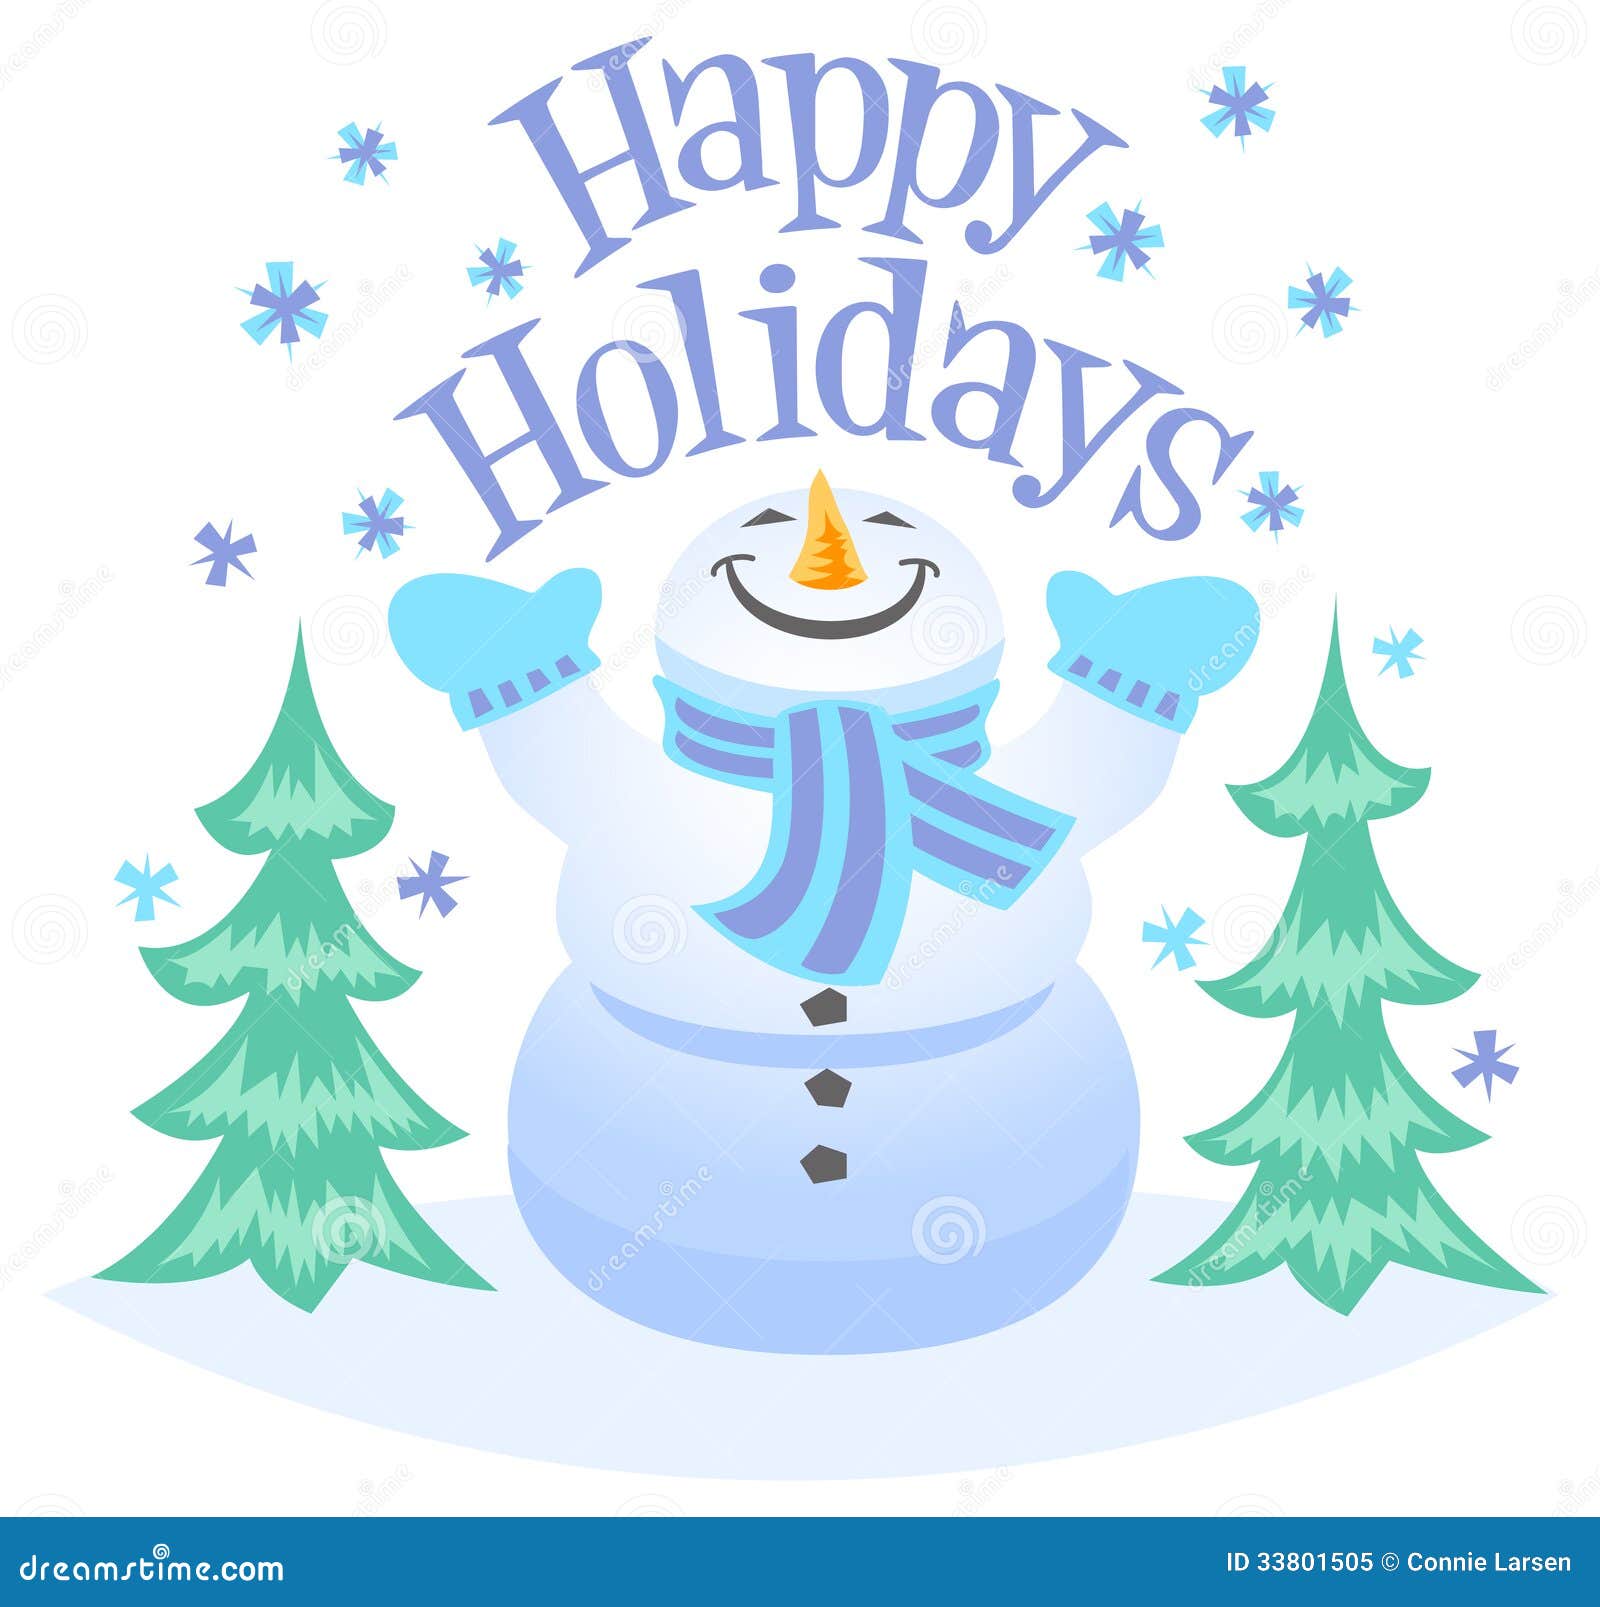 Happy Holidays Snowman stock vector. Illustration of